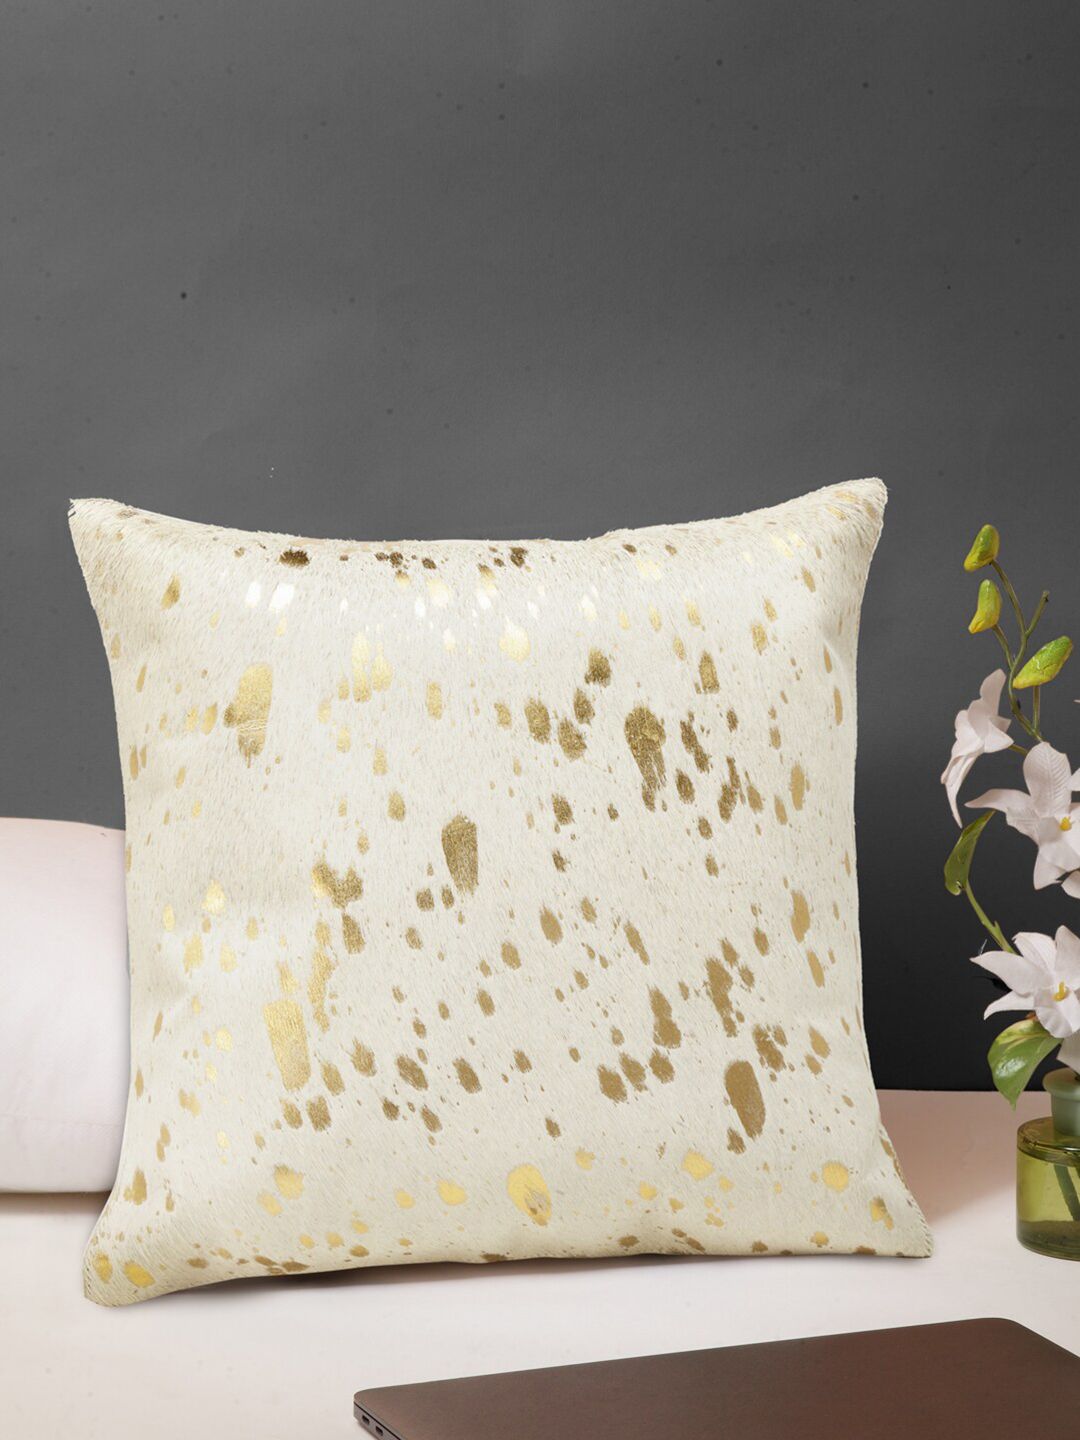 IMUR Cream-Coloured & Gold-Tone Textured Leather Square Cushion Cover Price in India